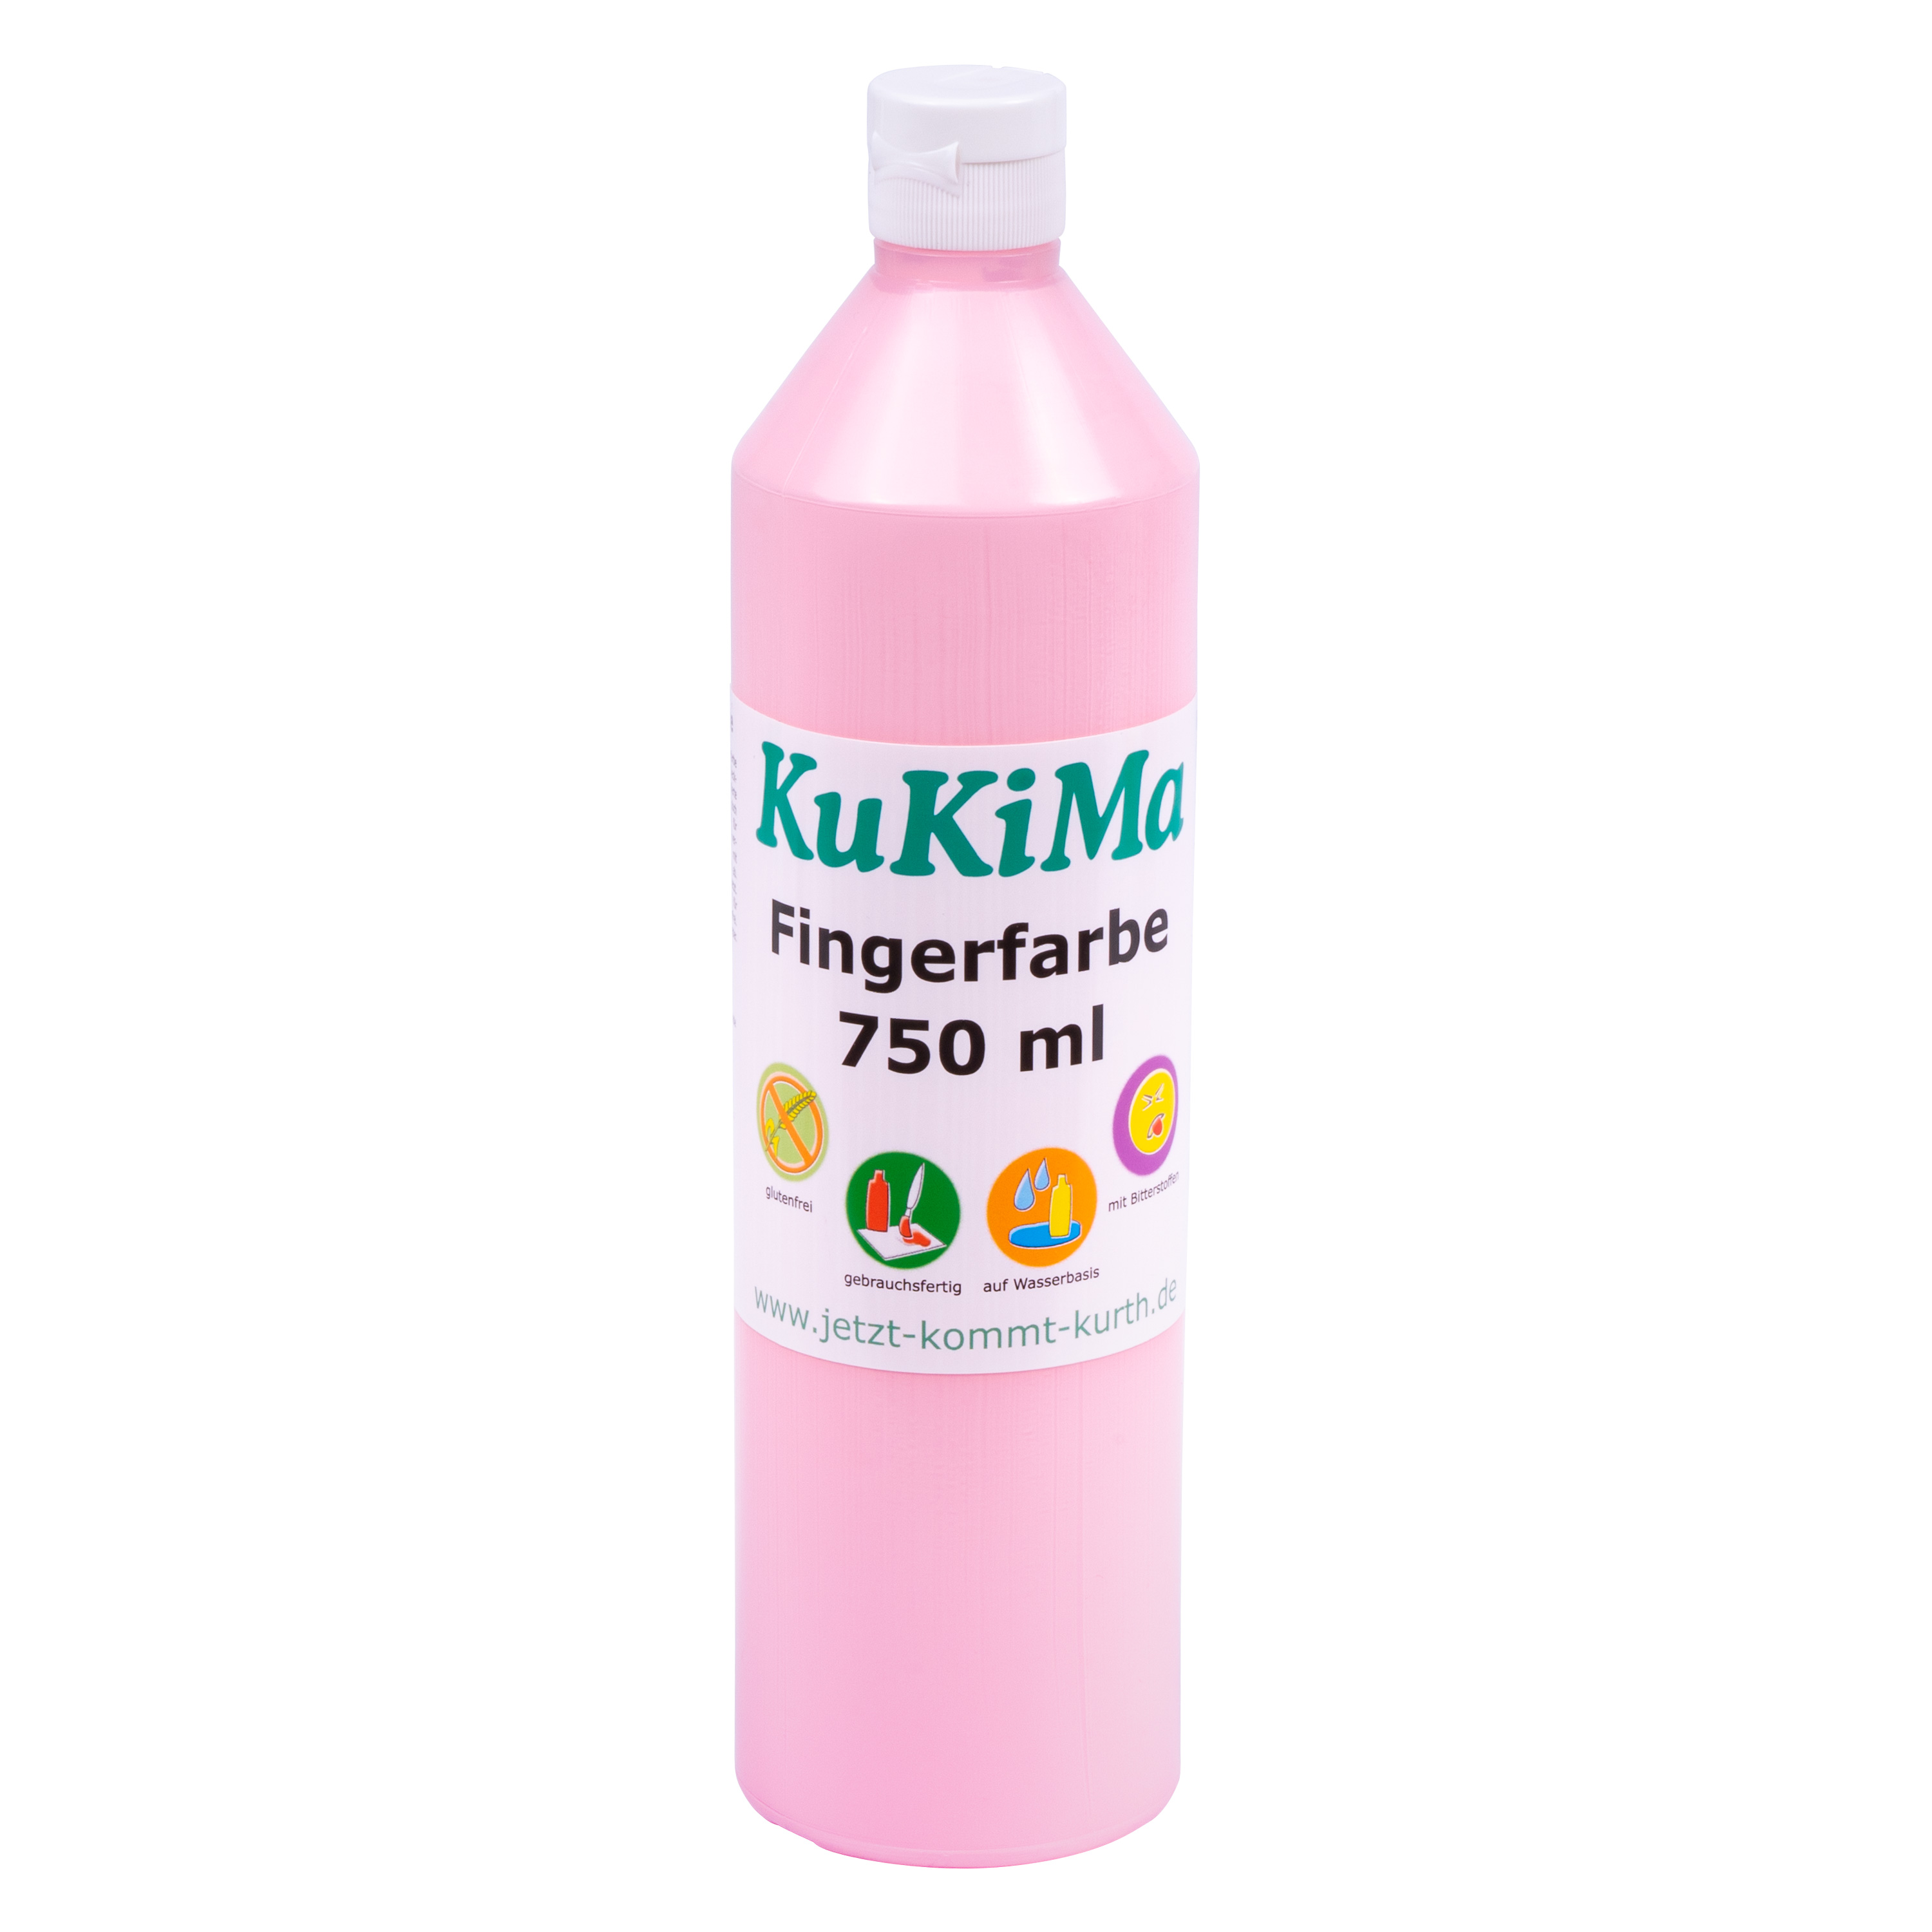 KuKiMa Fingerfarbe 750 ml, rosa